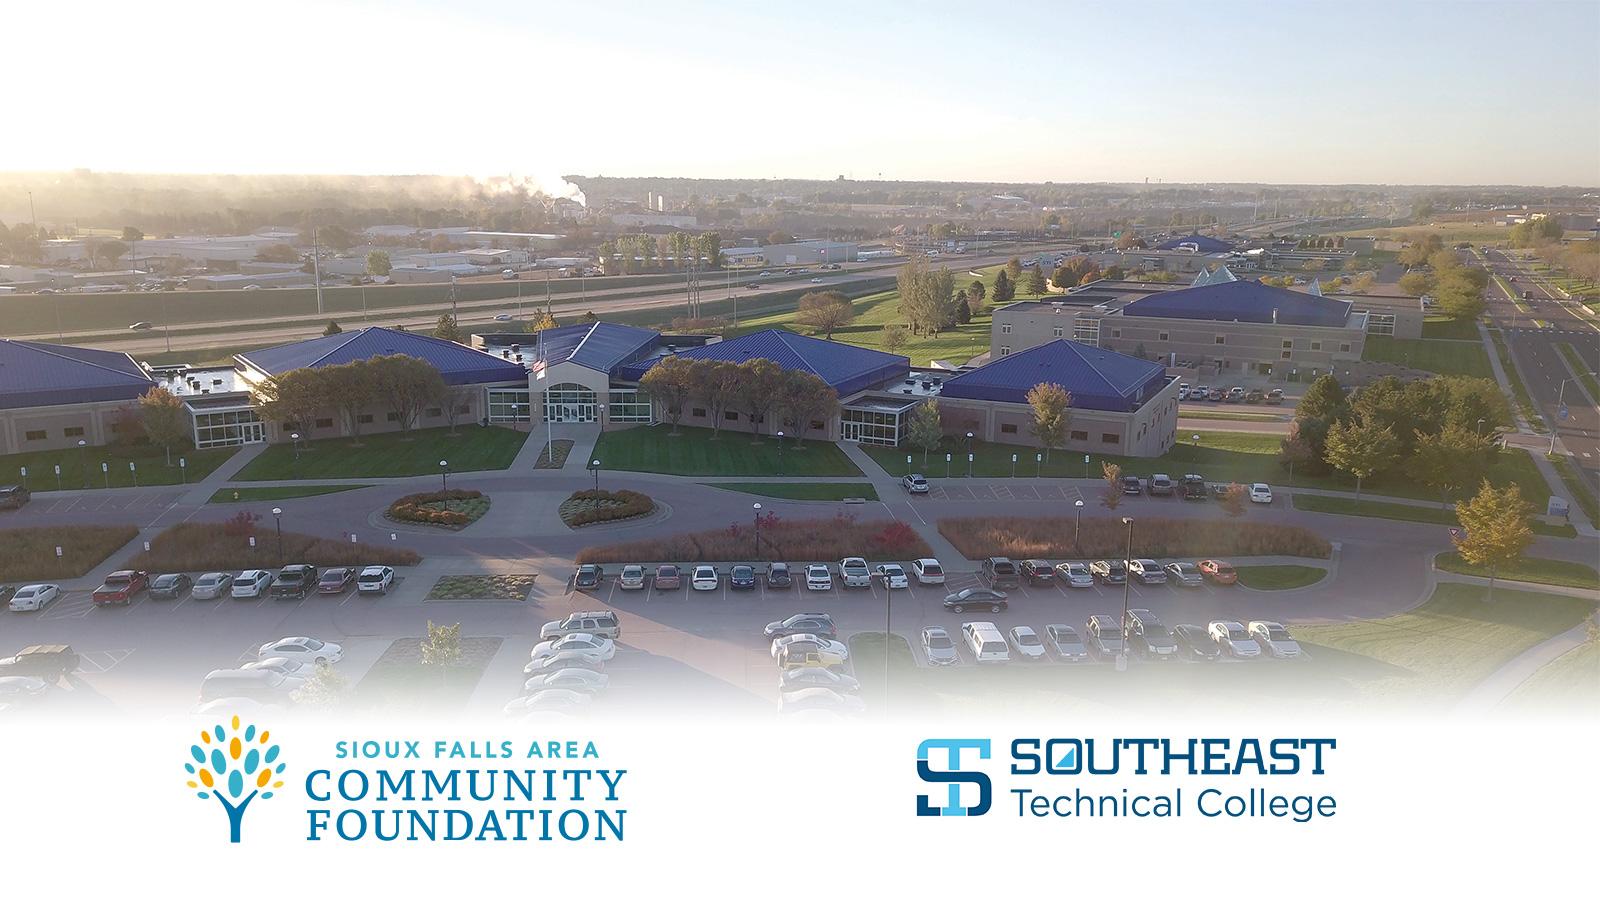 Southeast Technical College Sioux Falls South Dakota